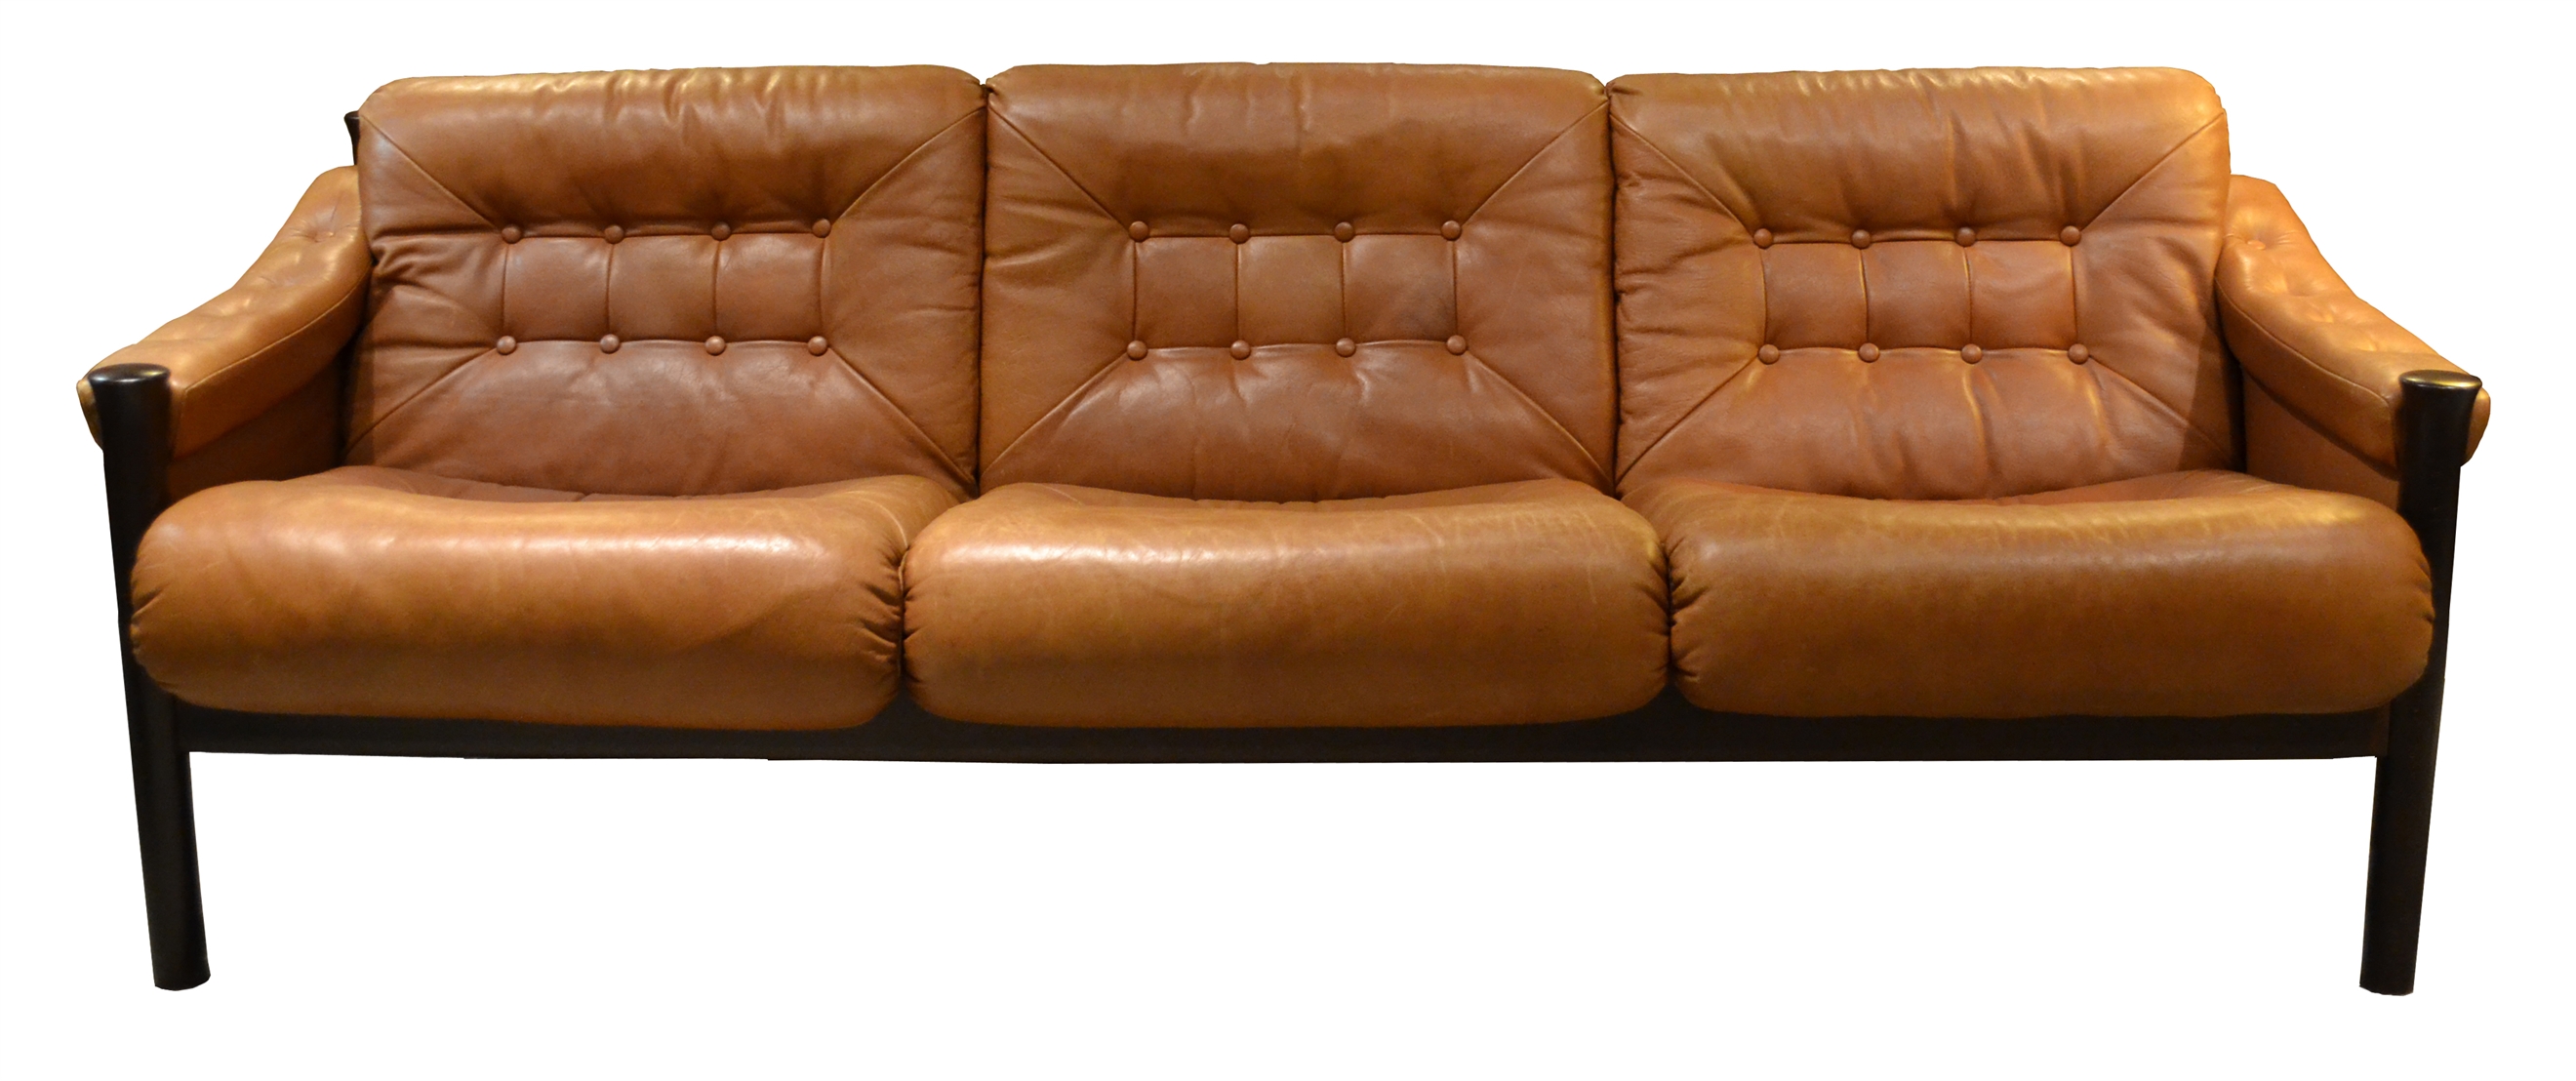 MB/3070 - Bruksbo Norwegian Sofa & Chair